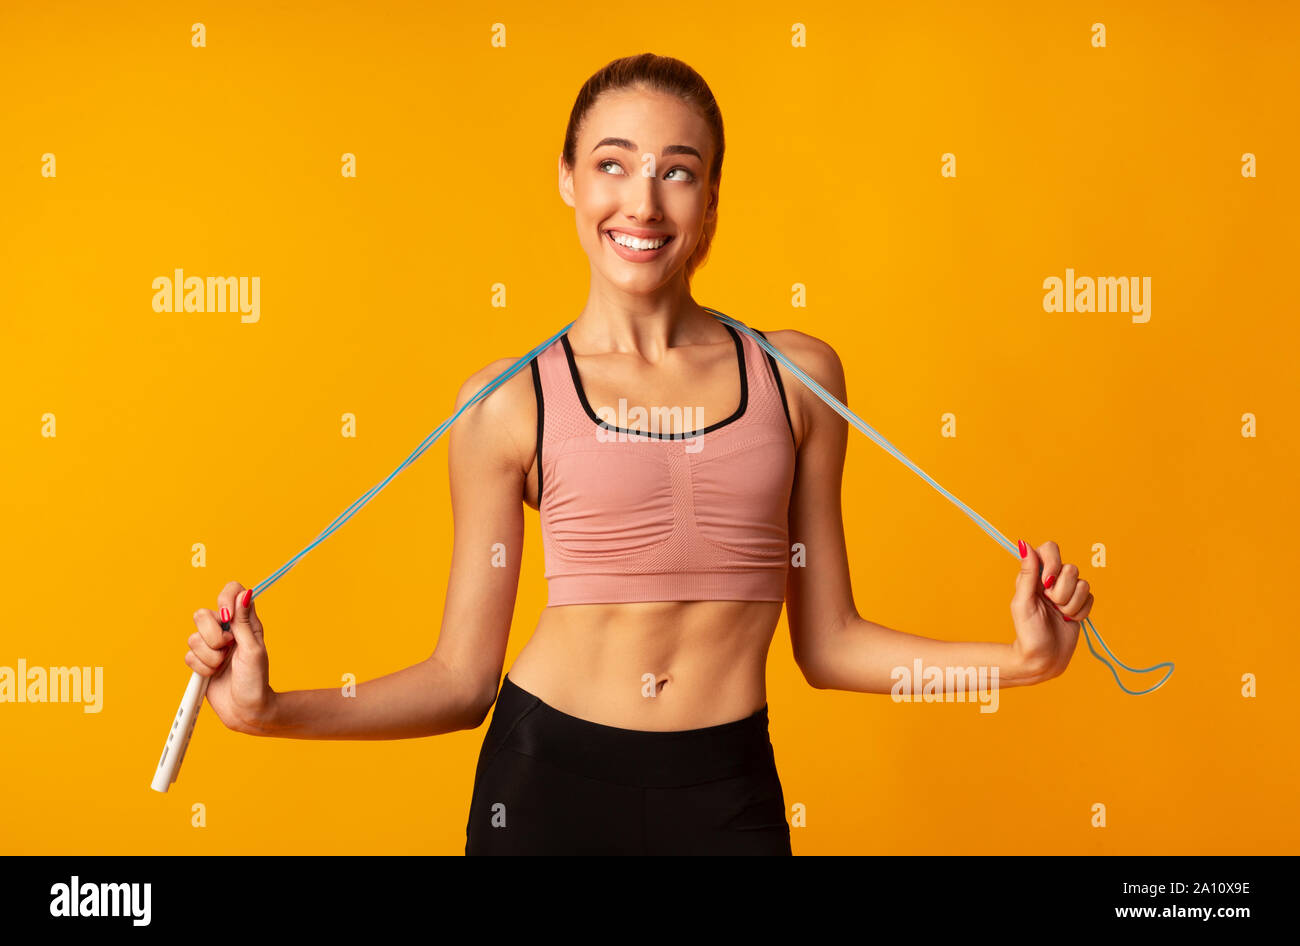 Slim Girl Holding Jump Rope Over Yellow Background Stock Photo